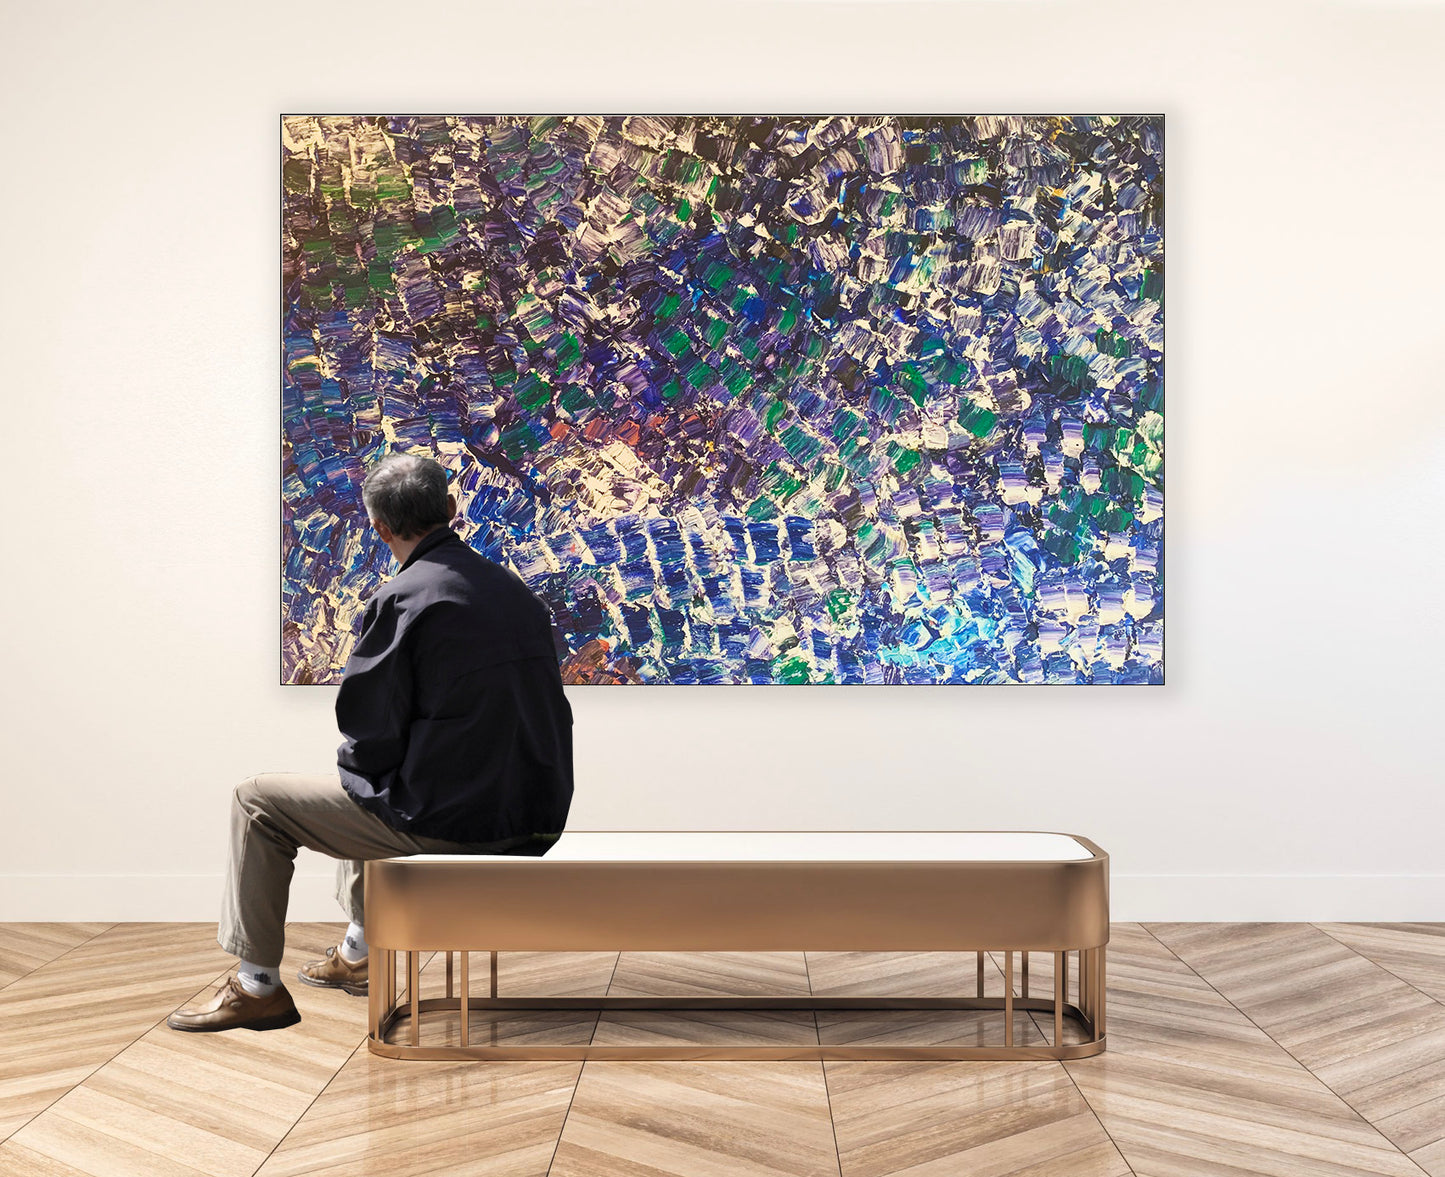 Calm Ocean Waves, 40”x60” Oil On Canvas, Sold 2020